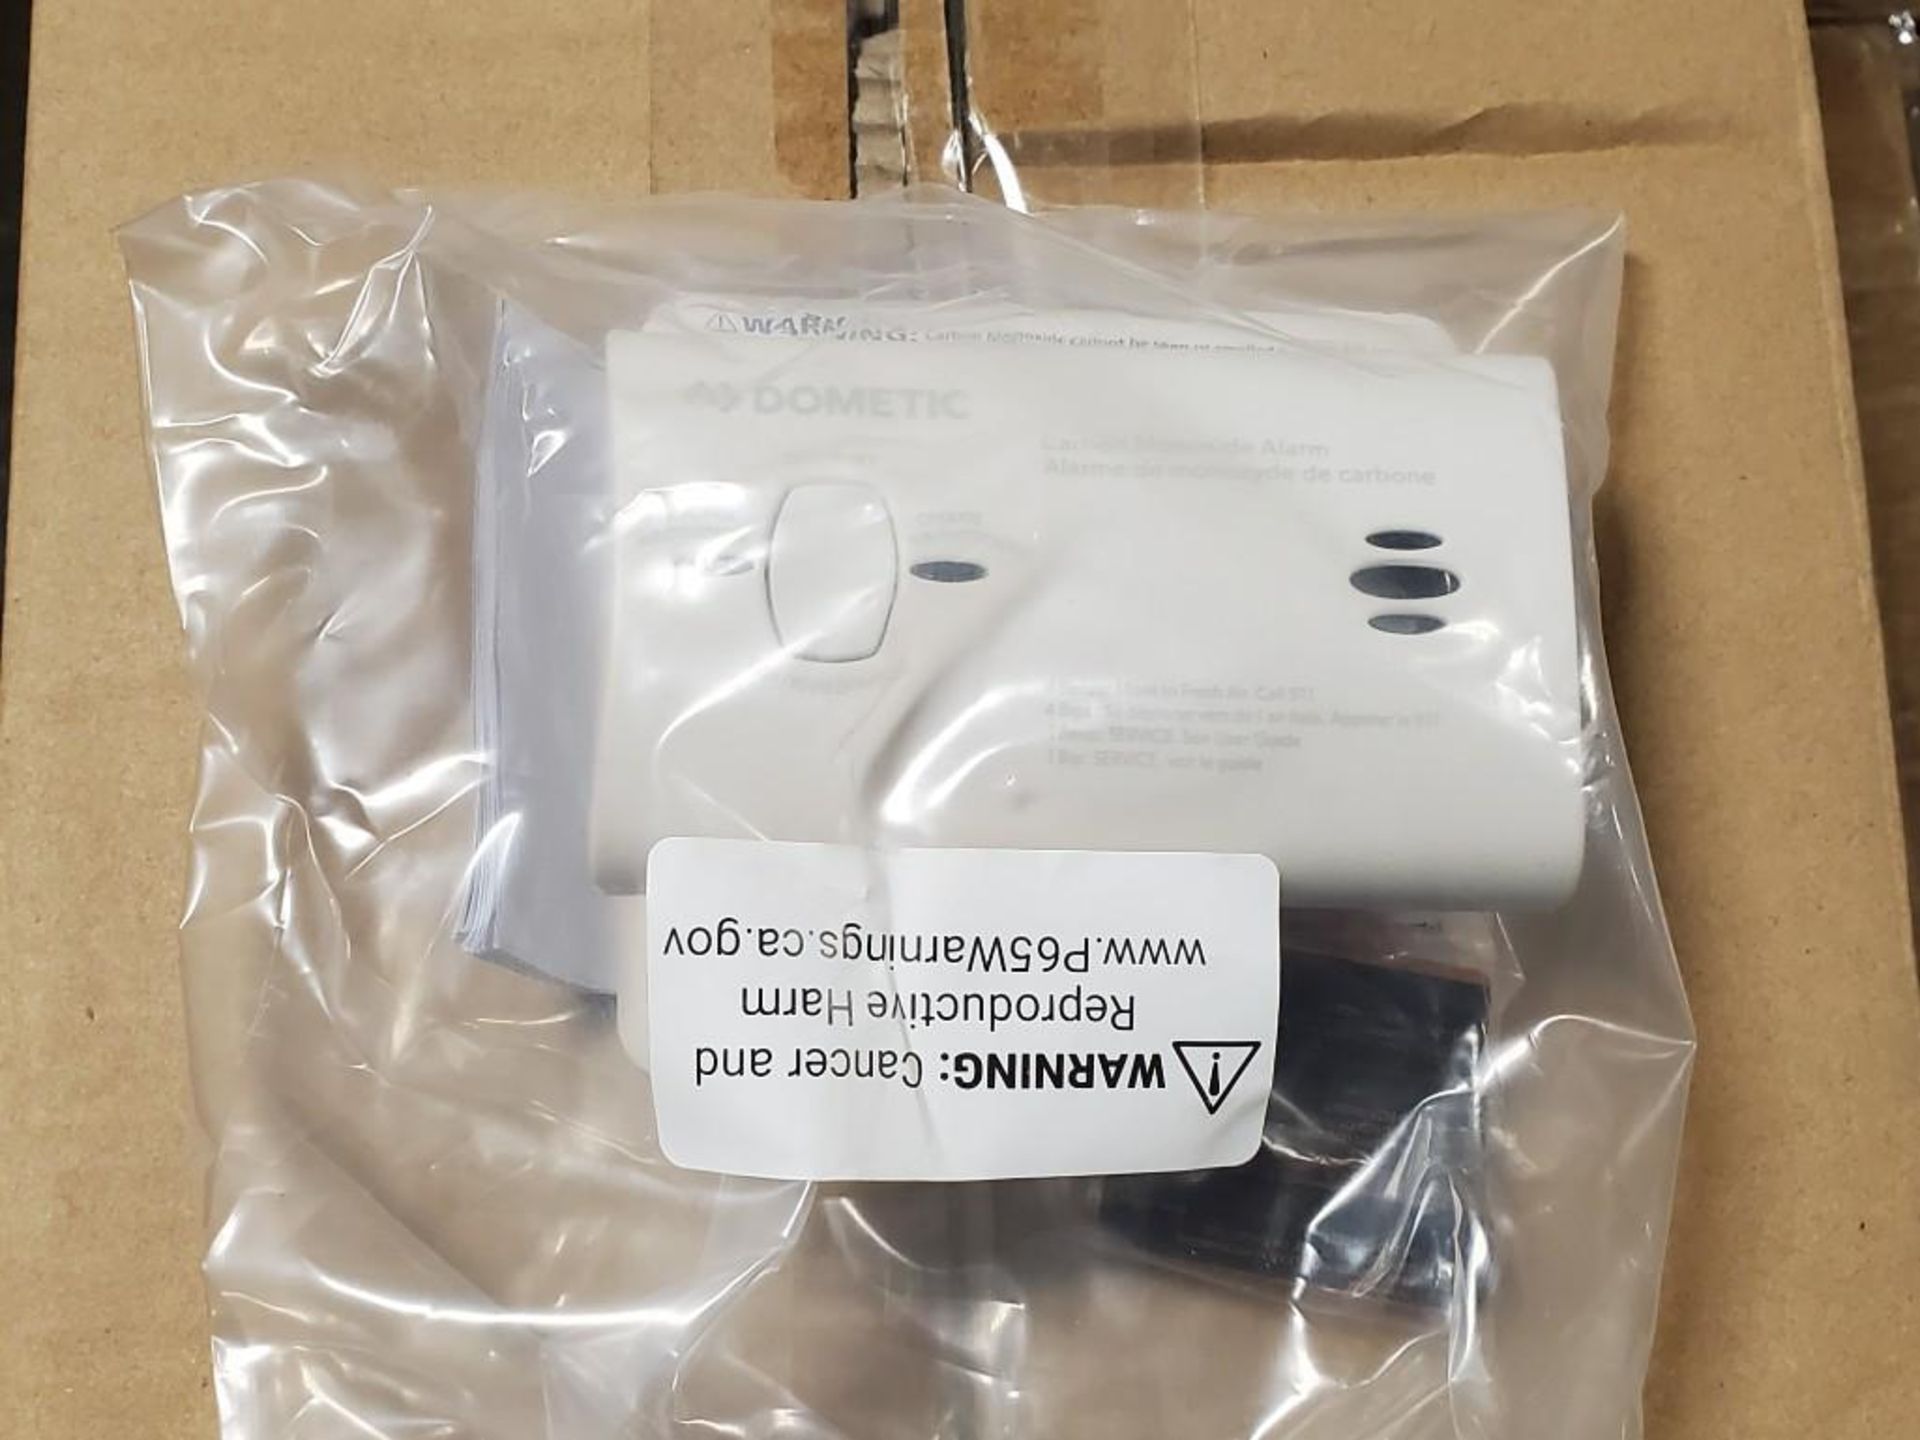 Qty 72 - Dometic Carbon Monoxide detector. Model CO-900-0143-LPM. New in bulk box. 2 boxes of 36 uni - Image 4 of 4